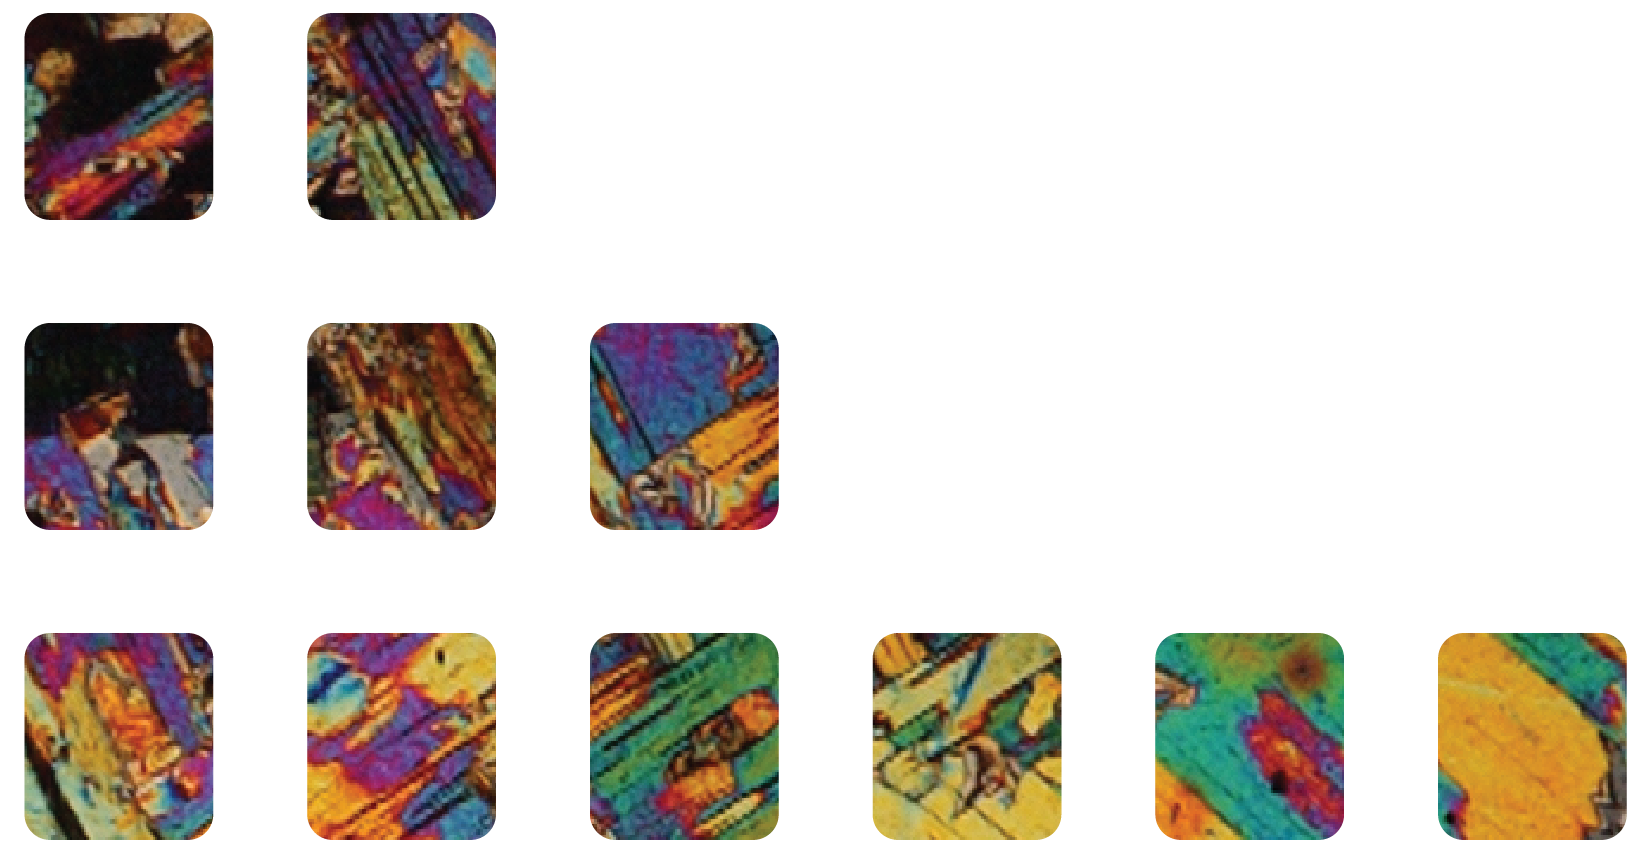 Variscan Coast Geoscience